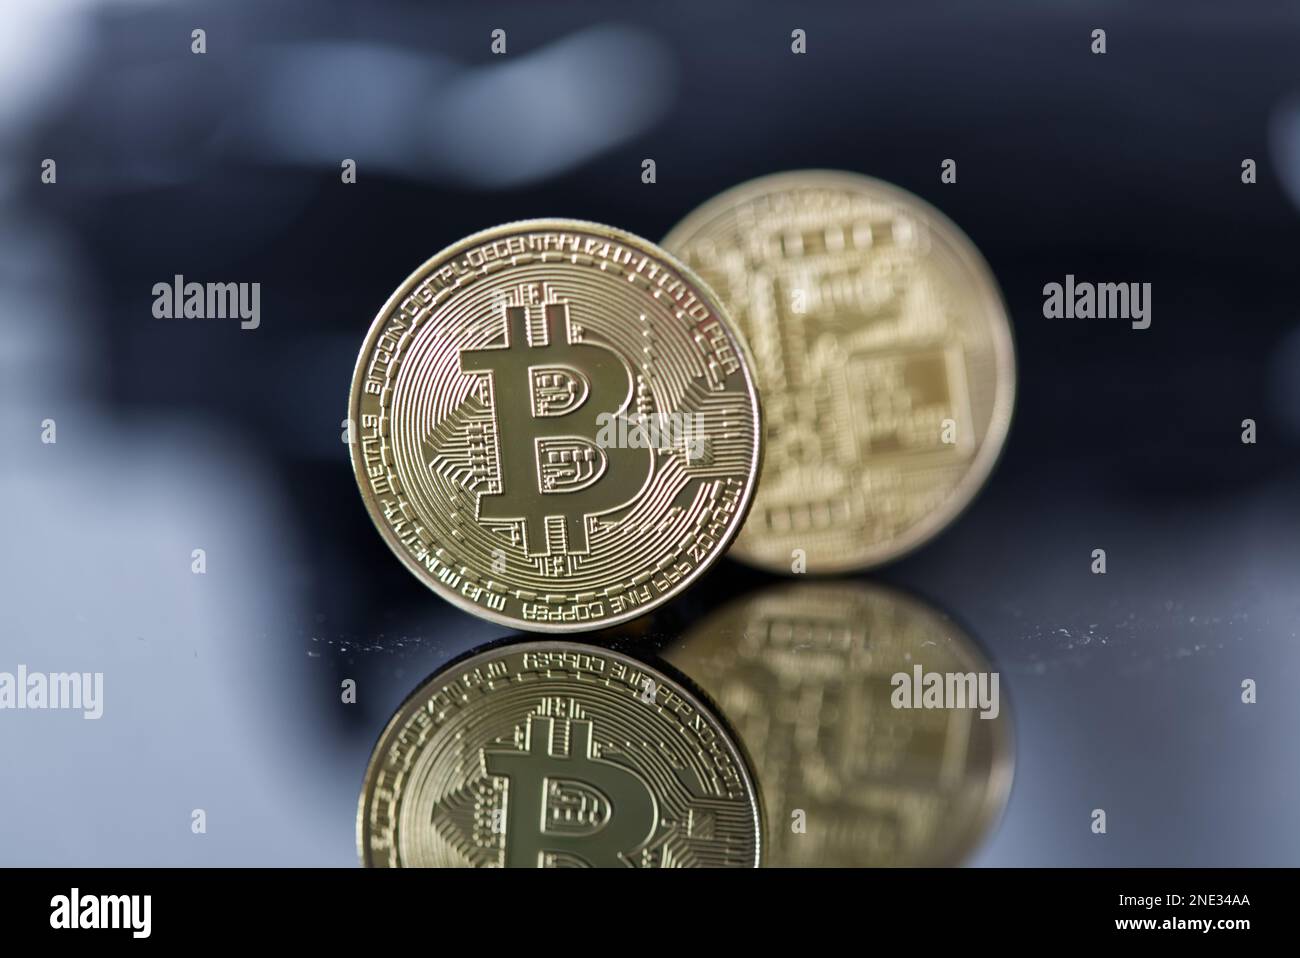 Bitcoin Technology is this the Future of payments? Die Bitcoin Währung, als Zahlungsmittel zukunftssicher? Stock Photo